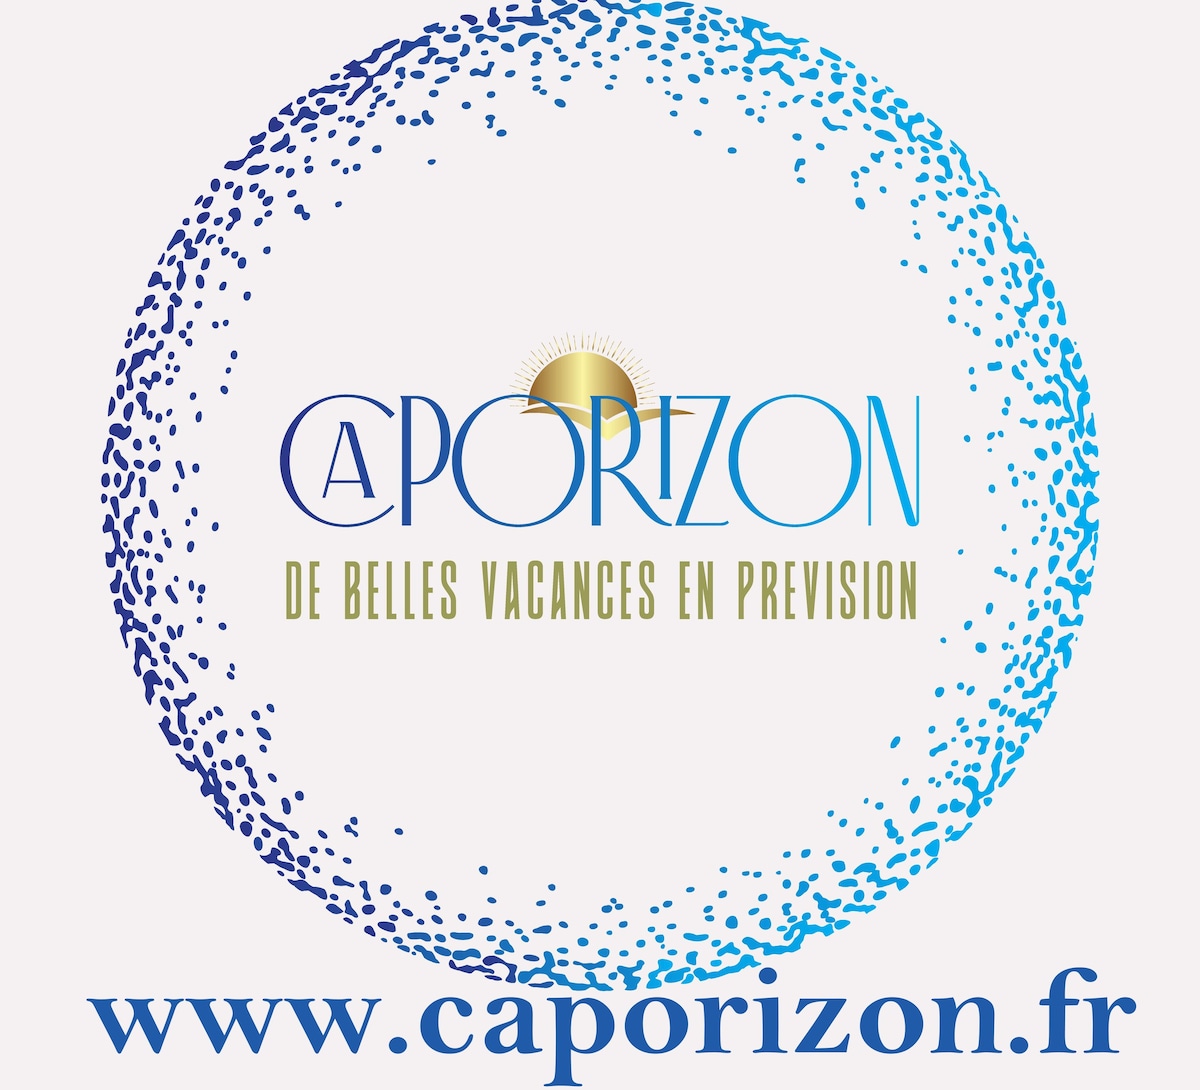 Caporizon-La Verrière-Le Clos de Chambord